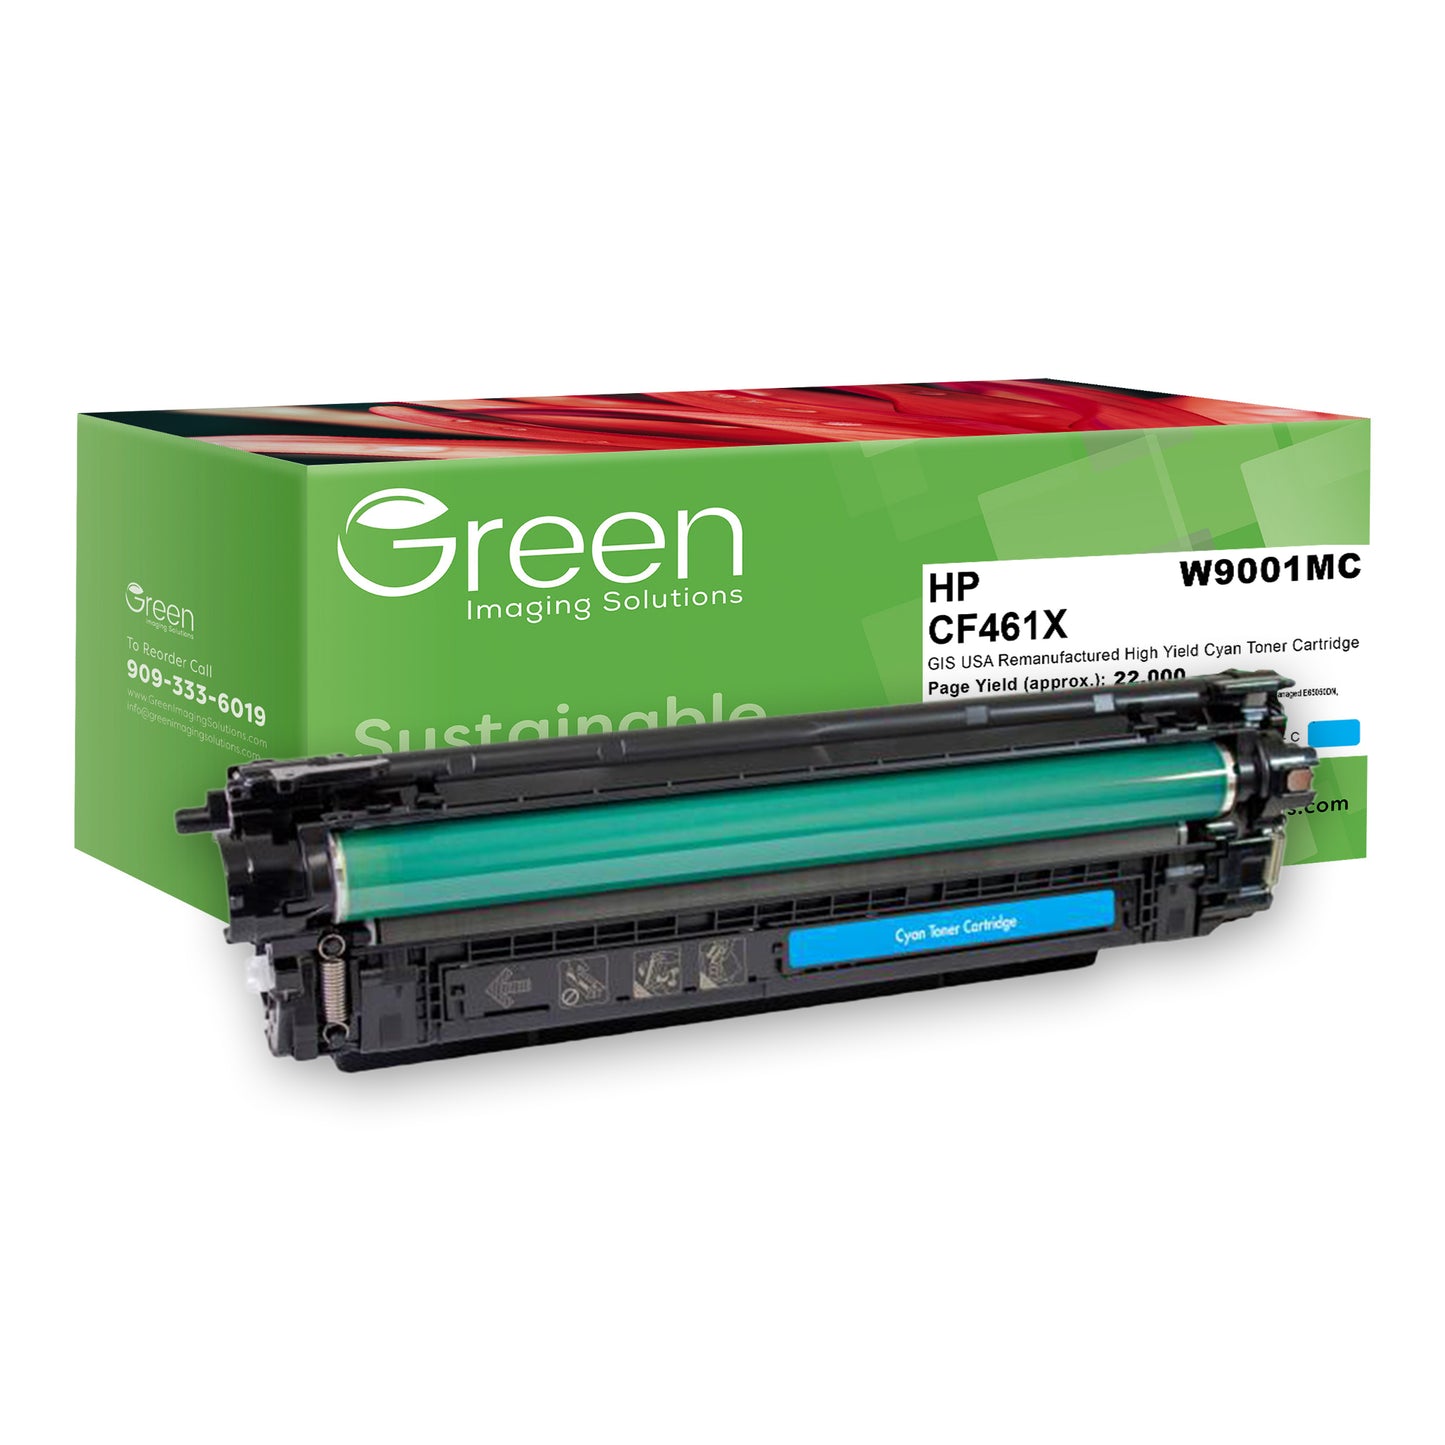 Green Imaging Solutions USA Remanufactured High Yield Cyan Toner Cartridge for HP 656X (CF461X/W9001MC)